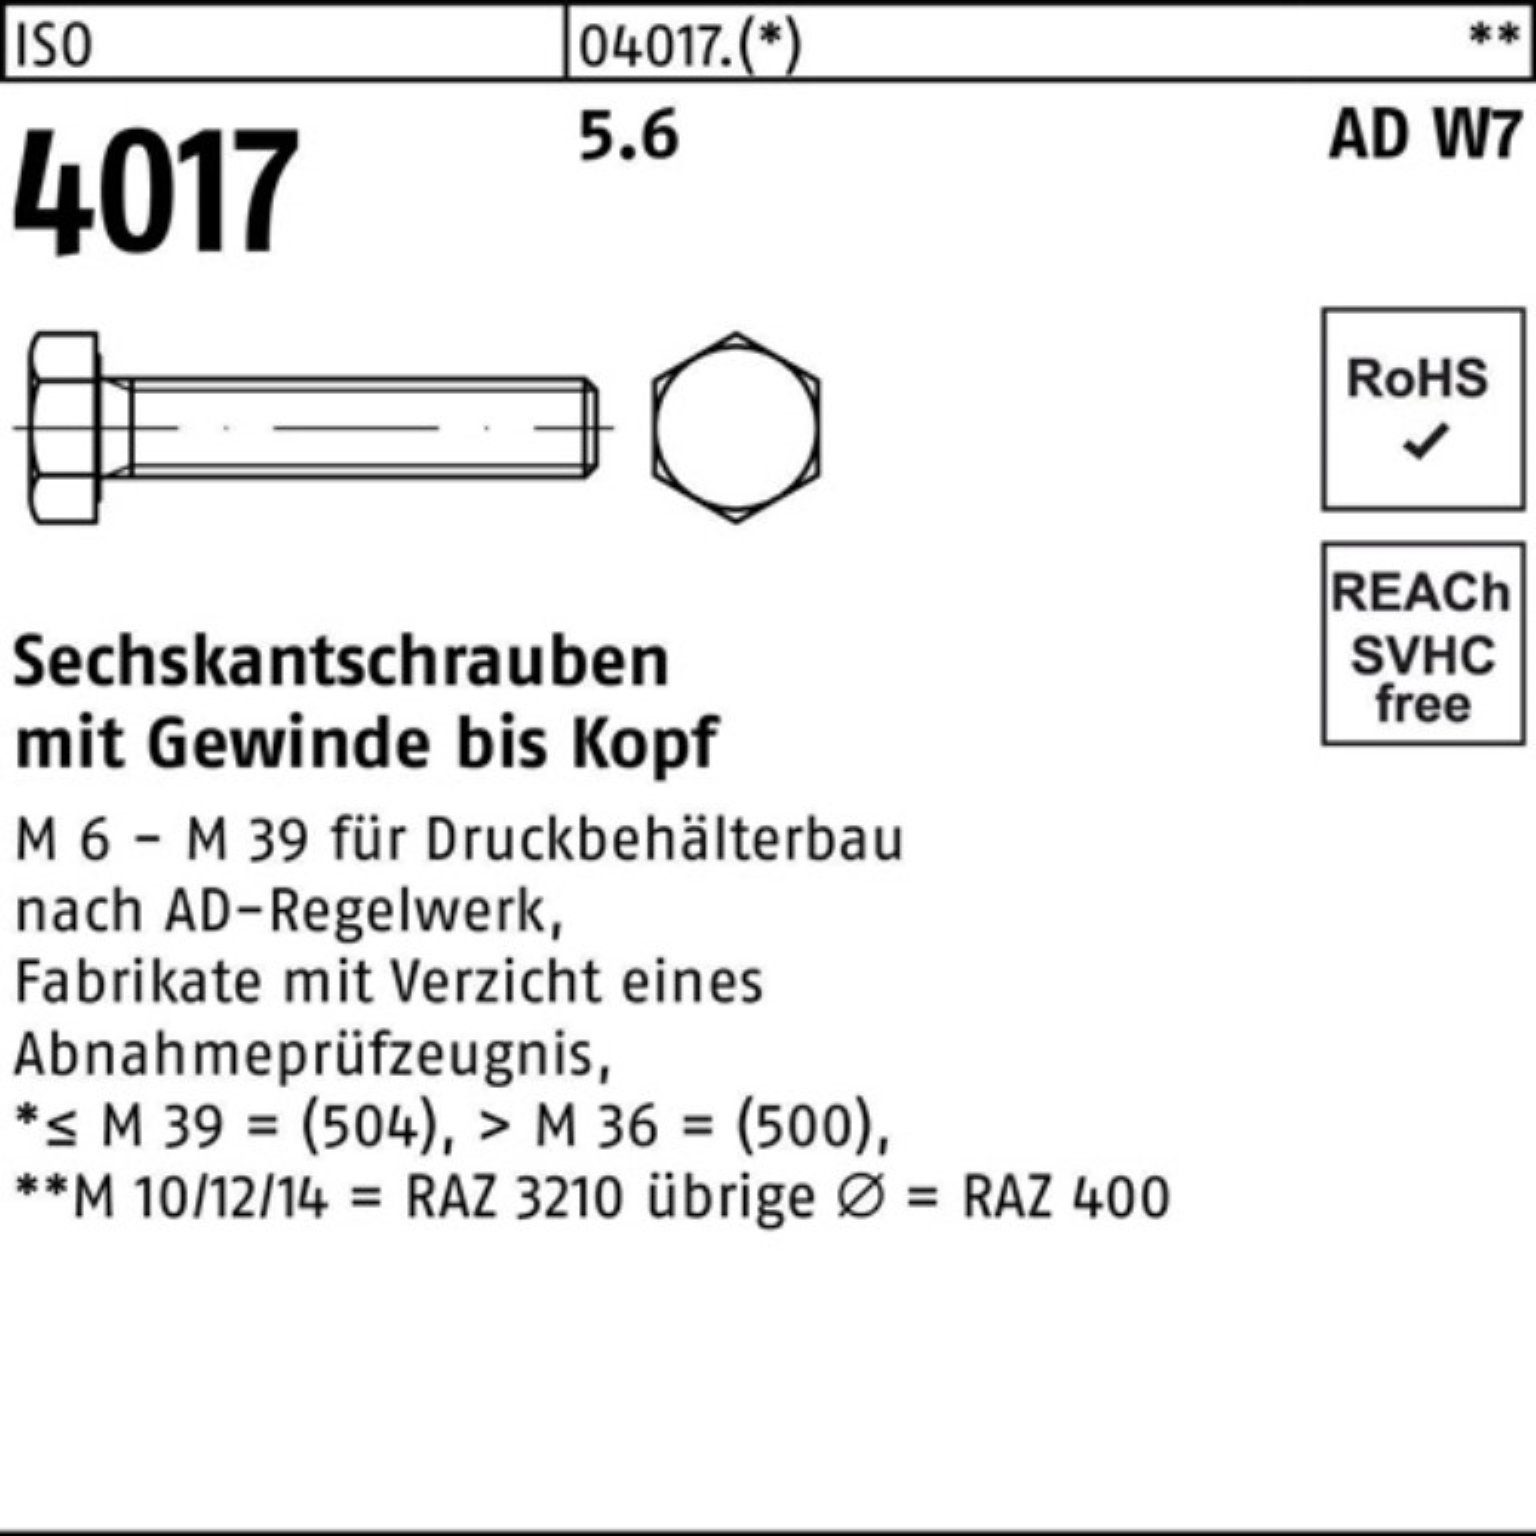 50 Sechskantschraube ISO Stück W7 VG Bufab M10x Pack AD Sechskantschraube 4017 5.6 100 100er